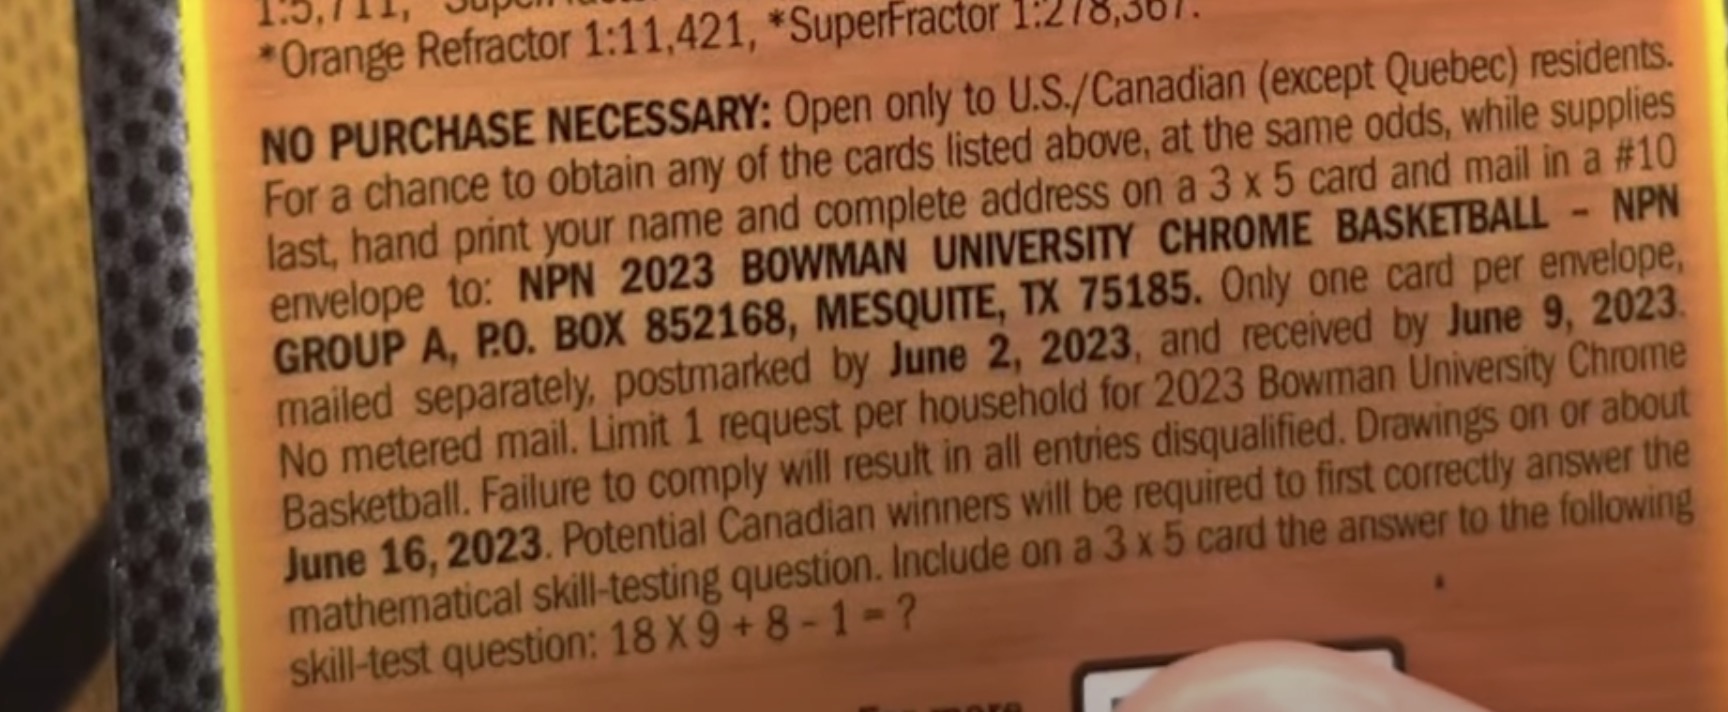 2022-23 Bowman University Chrome Basketball Cards - Blaster Box - No Purchase Necessary (NPN) Information